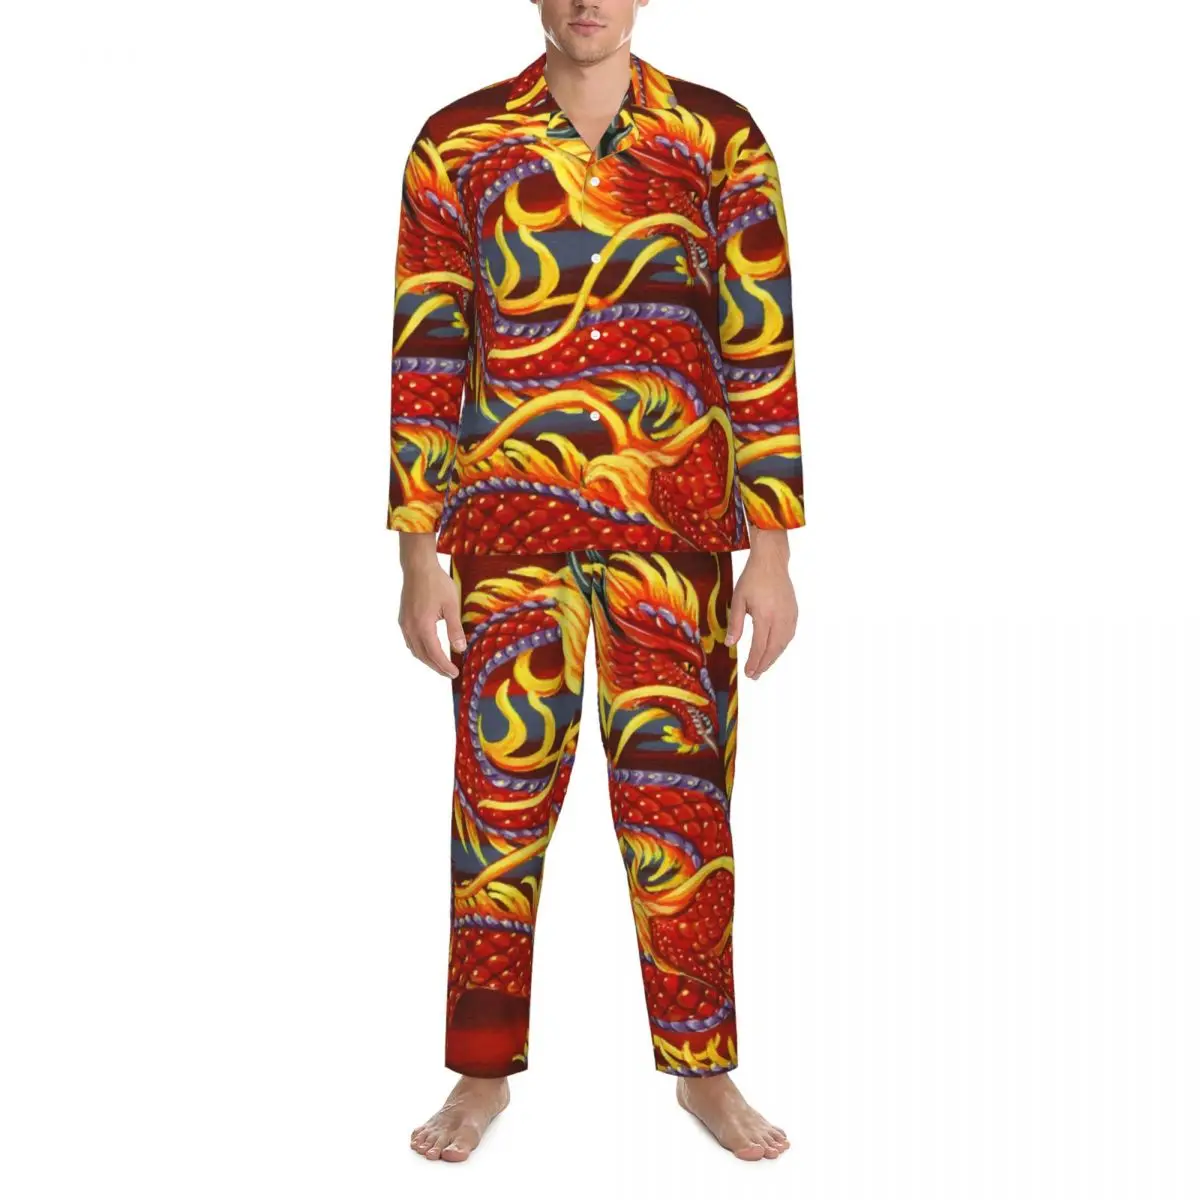 

Fire Dragon Pajama Sets Autumn Eastern Sunset Print Cute Daily Sleepwear Men 2 Piece Vintage Oversized Graphic Nightwear Present